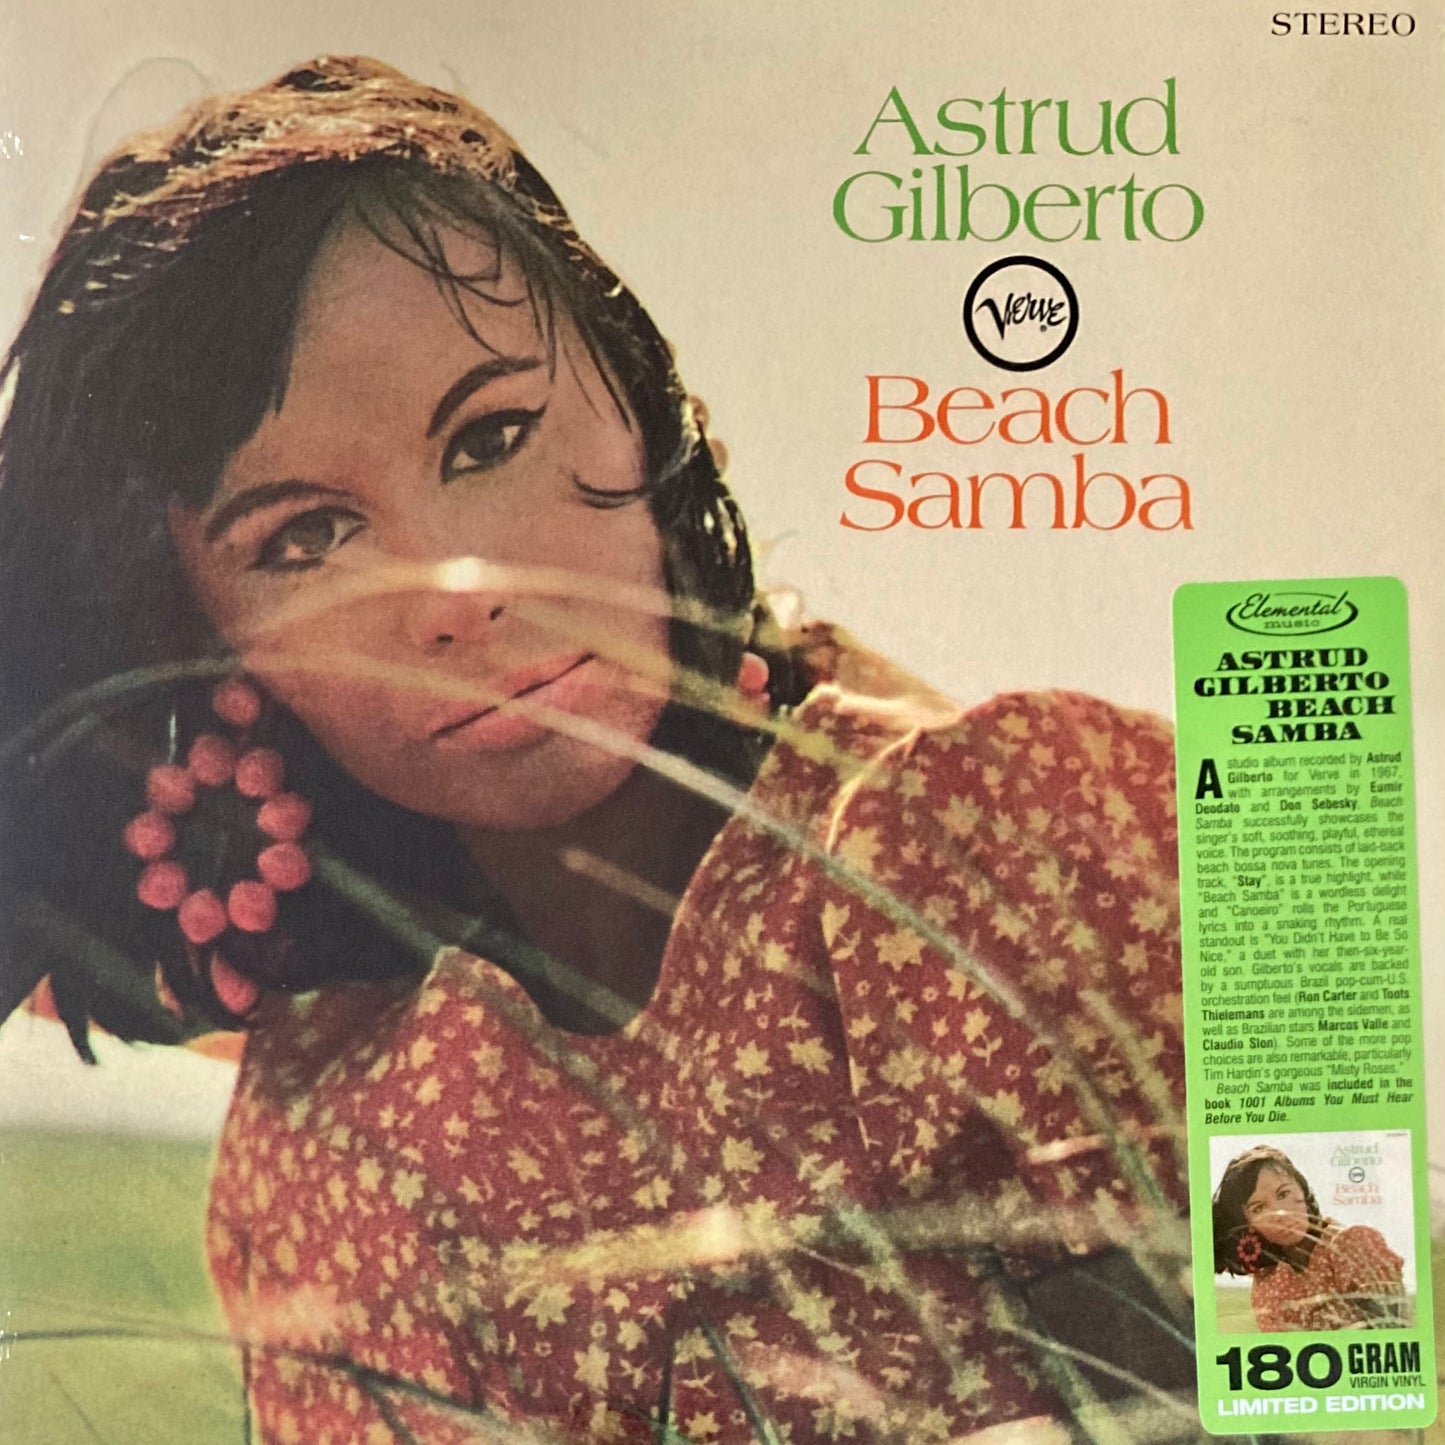 Astrud Gilberto – Beach Samba (Limited Edition) LP (Sealed)